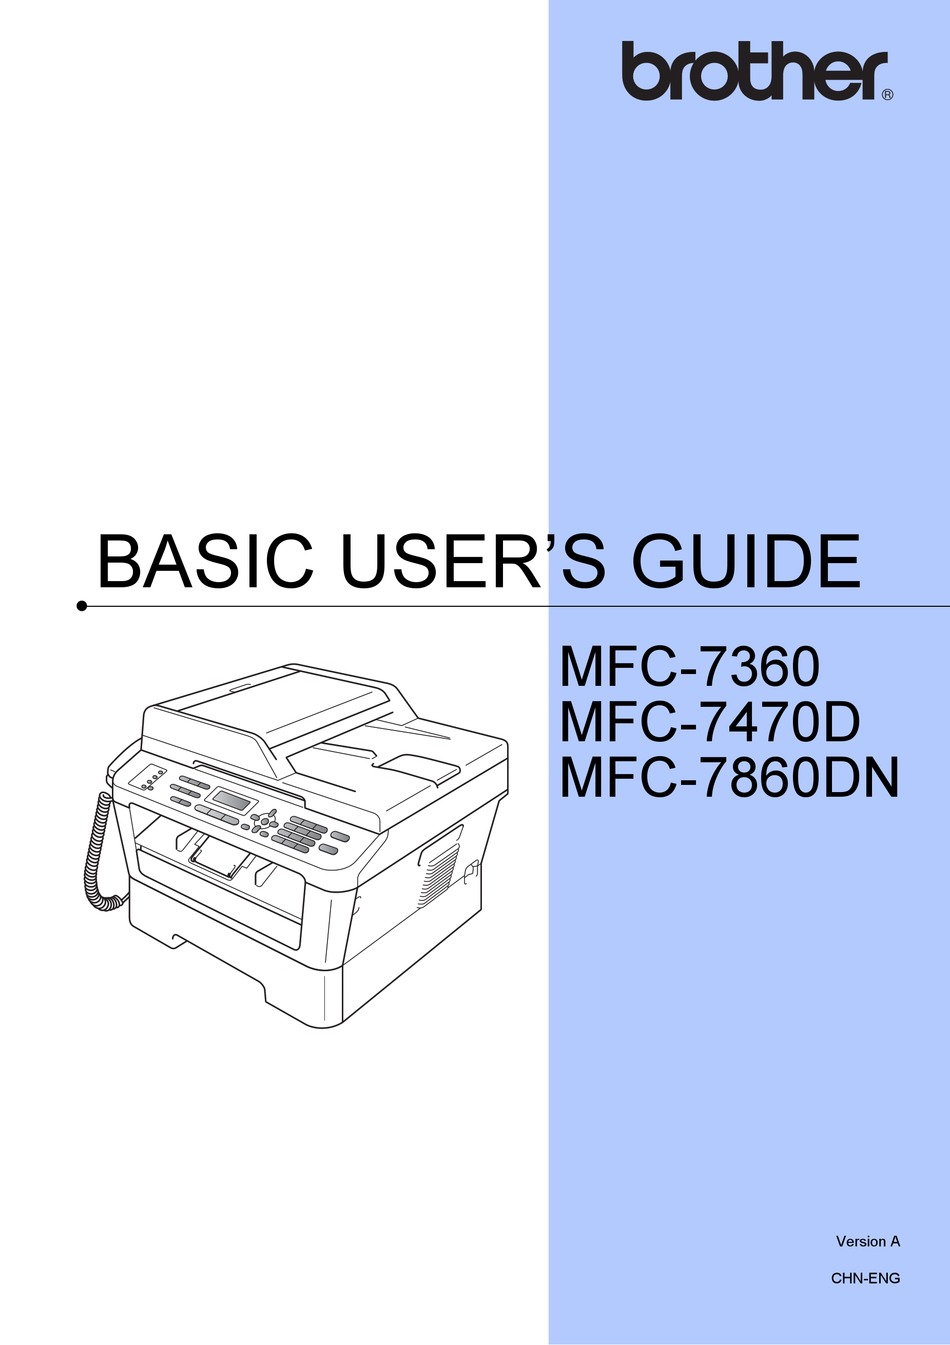 BROTHER MFC-7470D BASIC USER'S MANUAL Pdf Download | ManualsLib